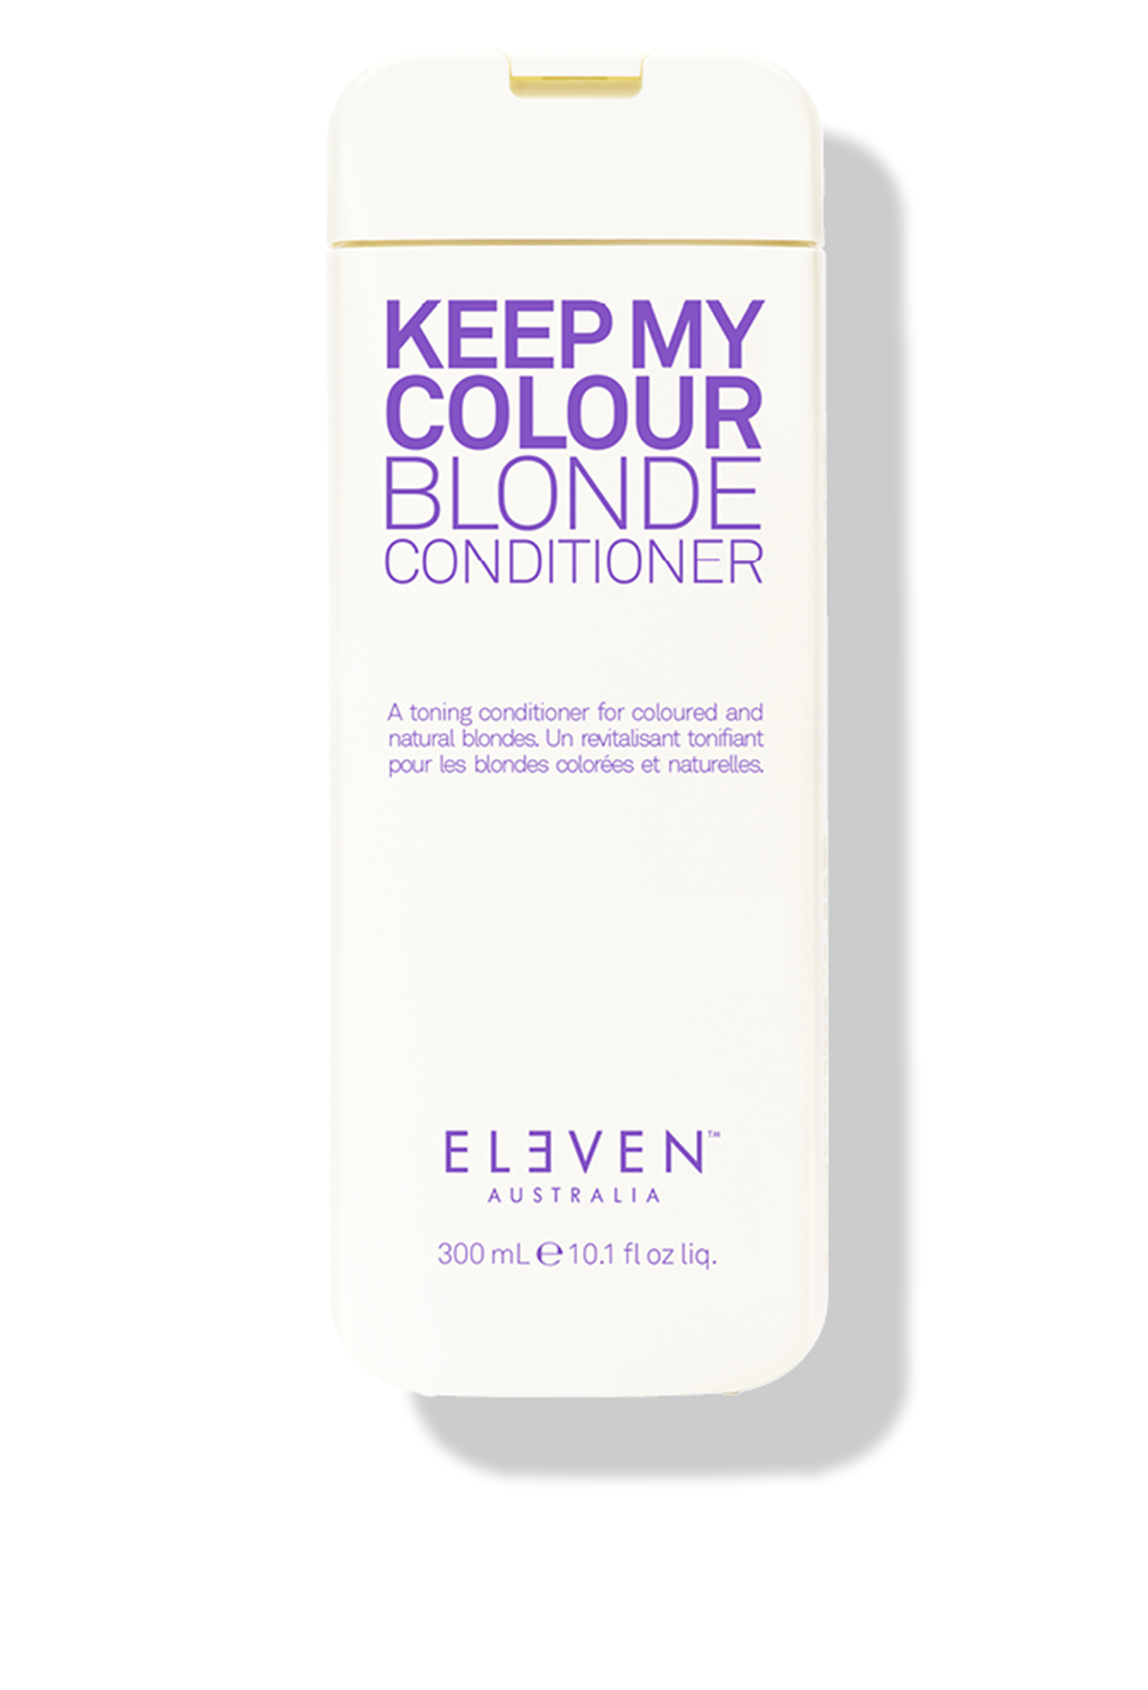 Eleven Australia keep my colour blonde conditioner